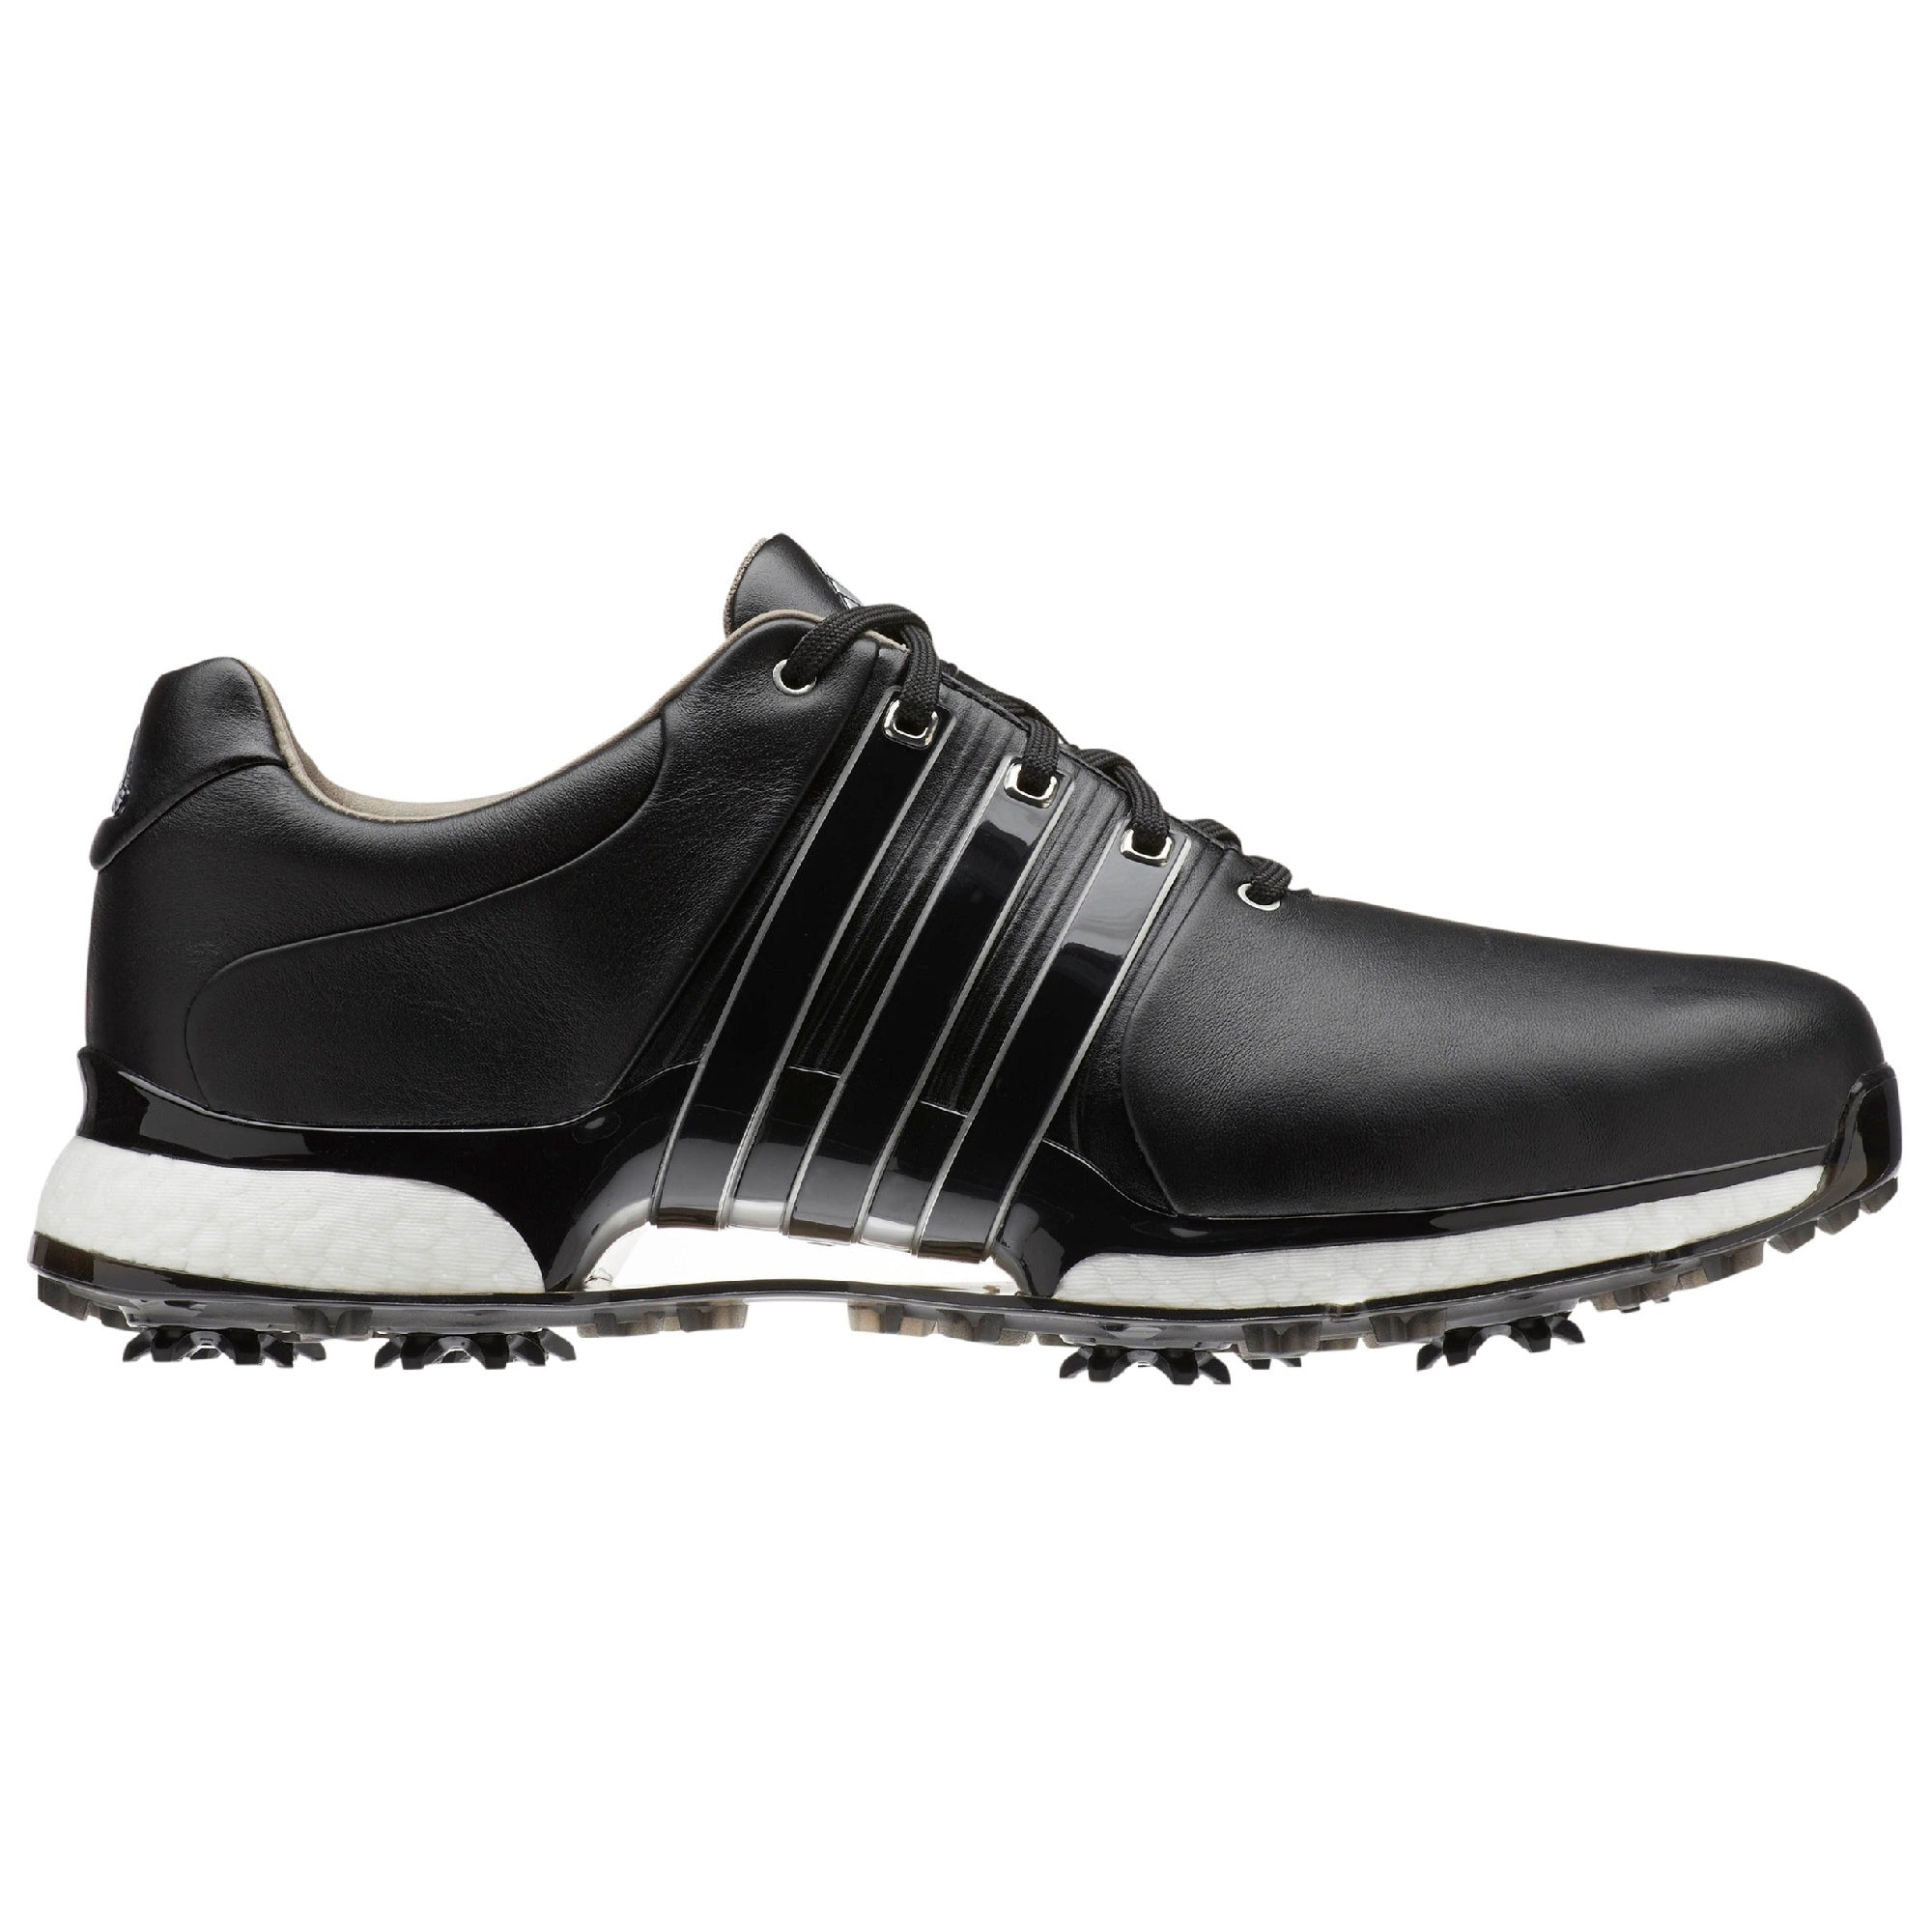 adidas tour 360 golf shoes black